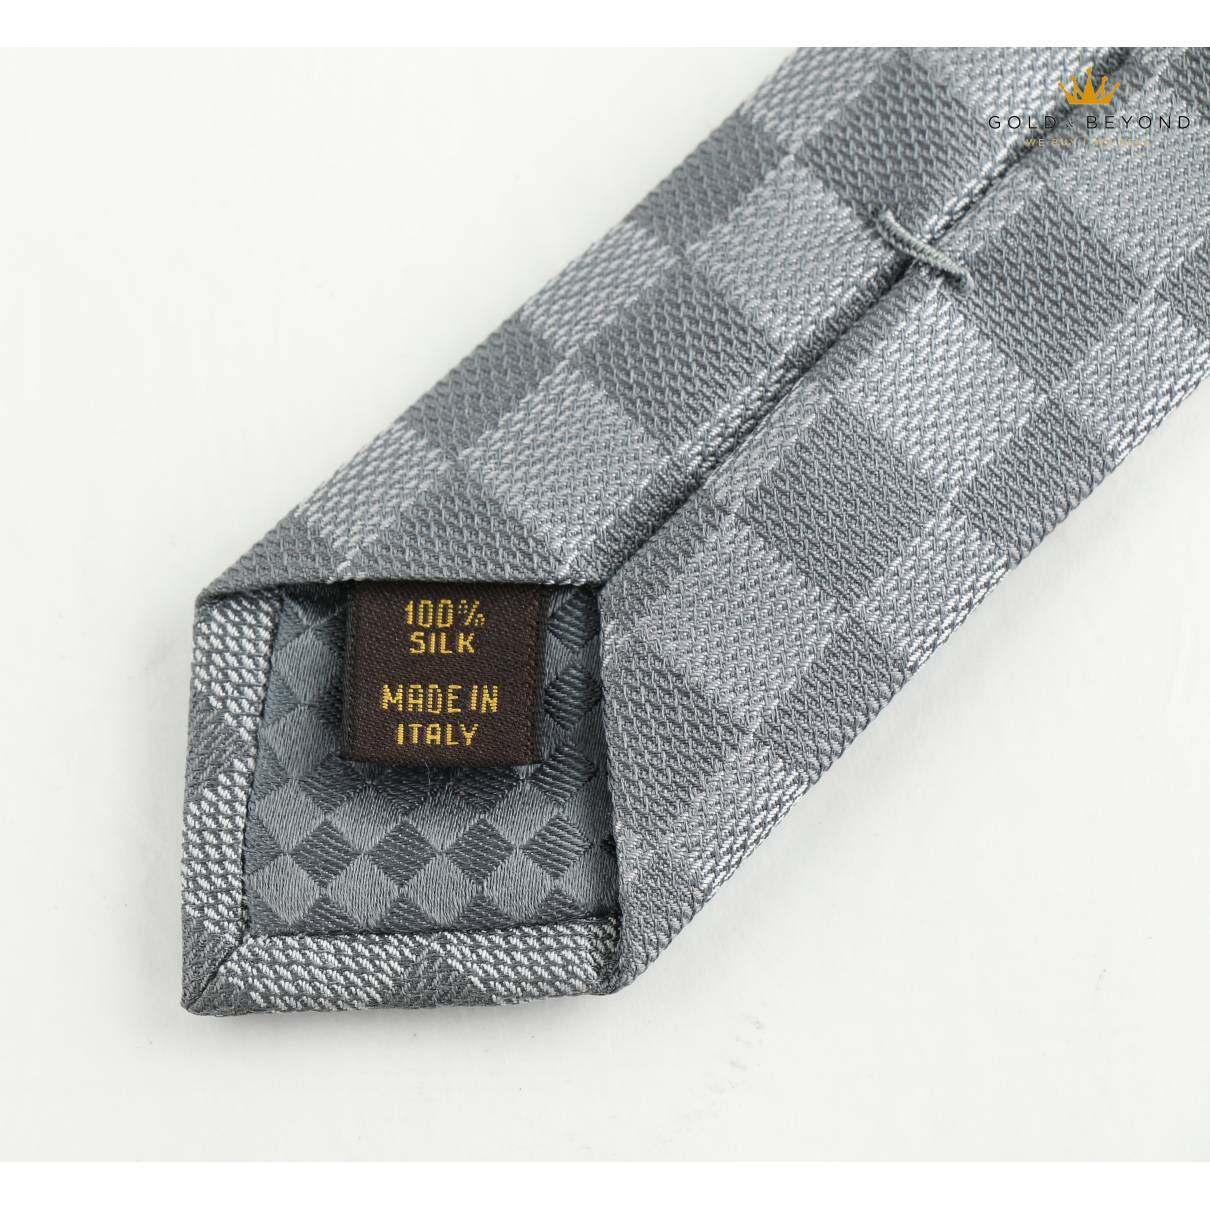 Louis Vuitton Replica - Knock Off Silk Plaid Tie